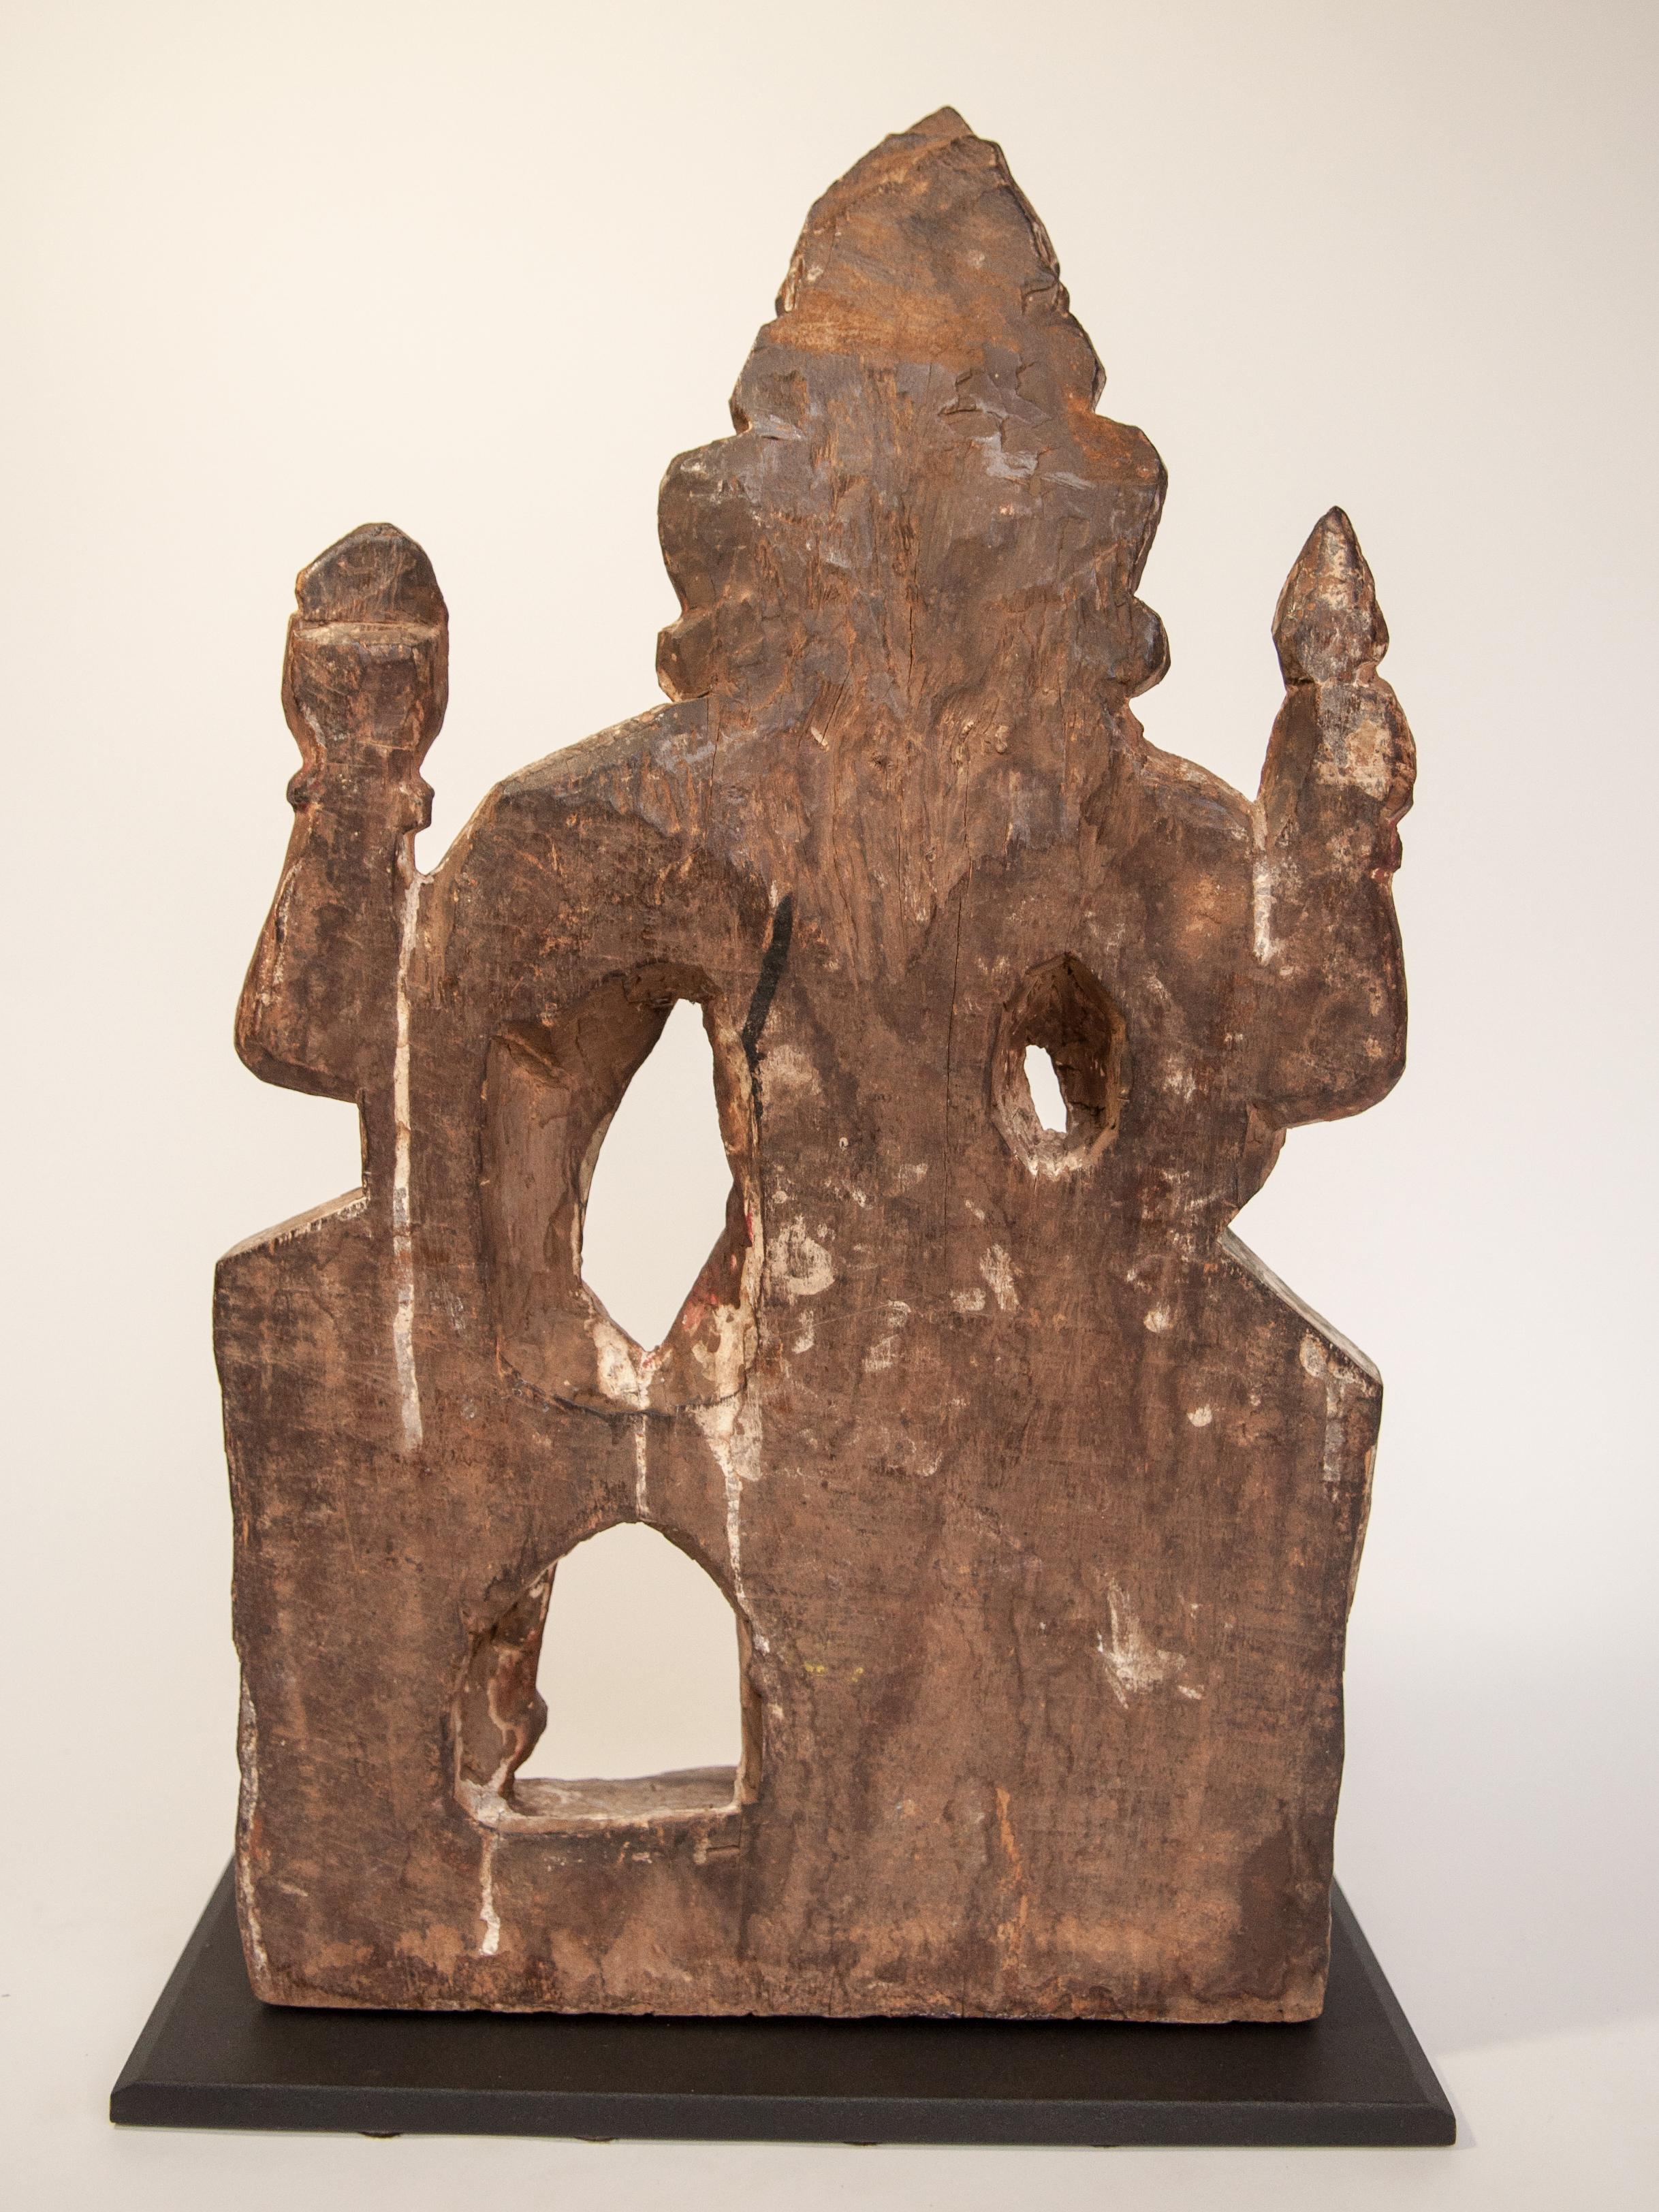 Pair of Vintage Wood Guardian Statues from India Early 20th Century, Jaya-Vijaya 2